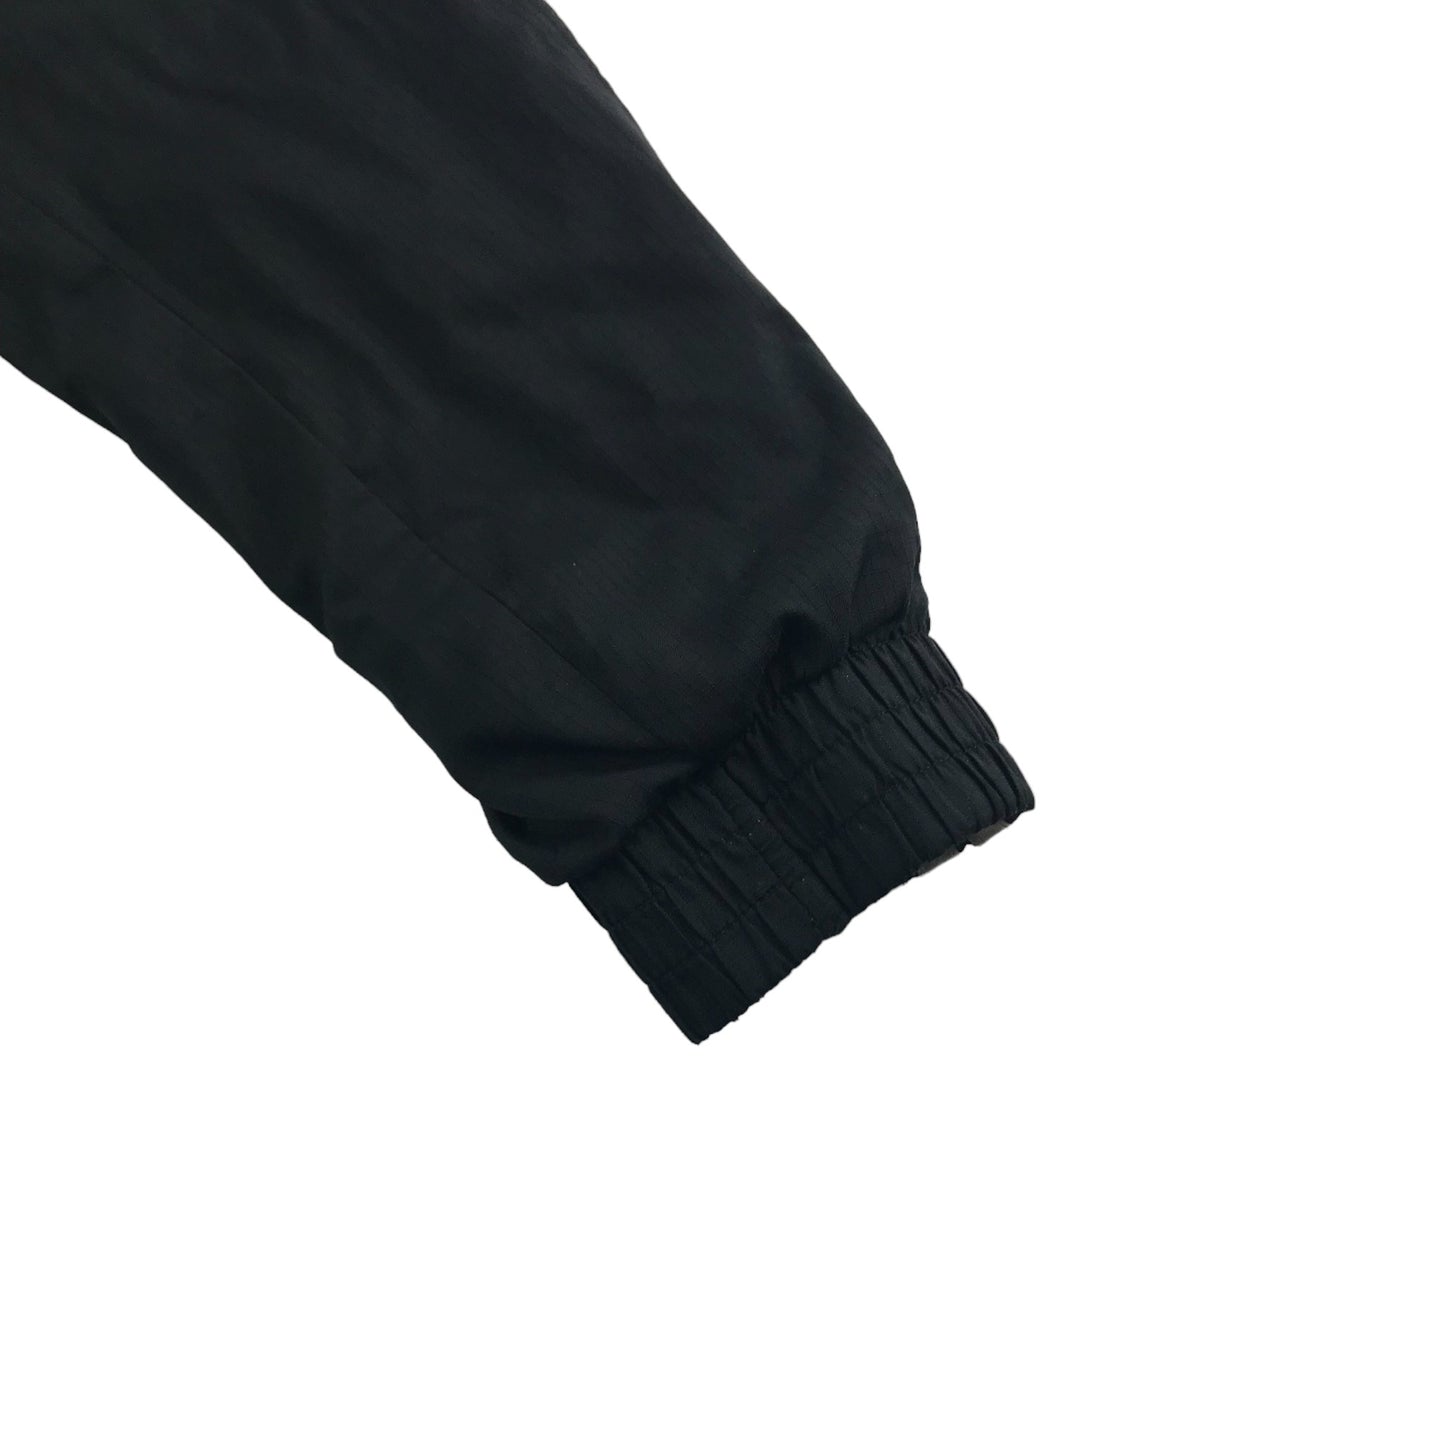 Adidas Sport Jacket Age 9 Black Full Zipper Hooded